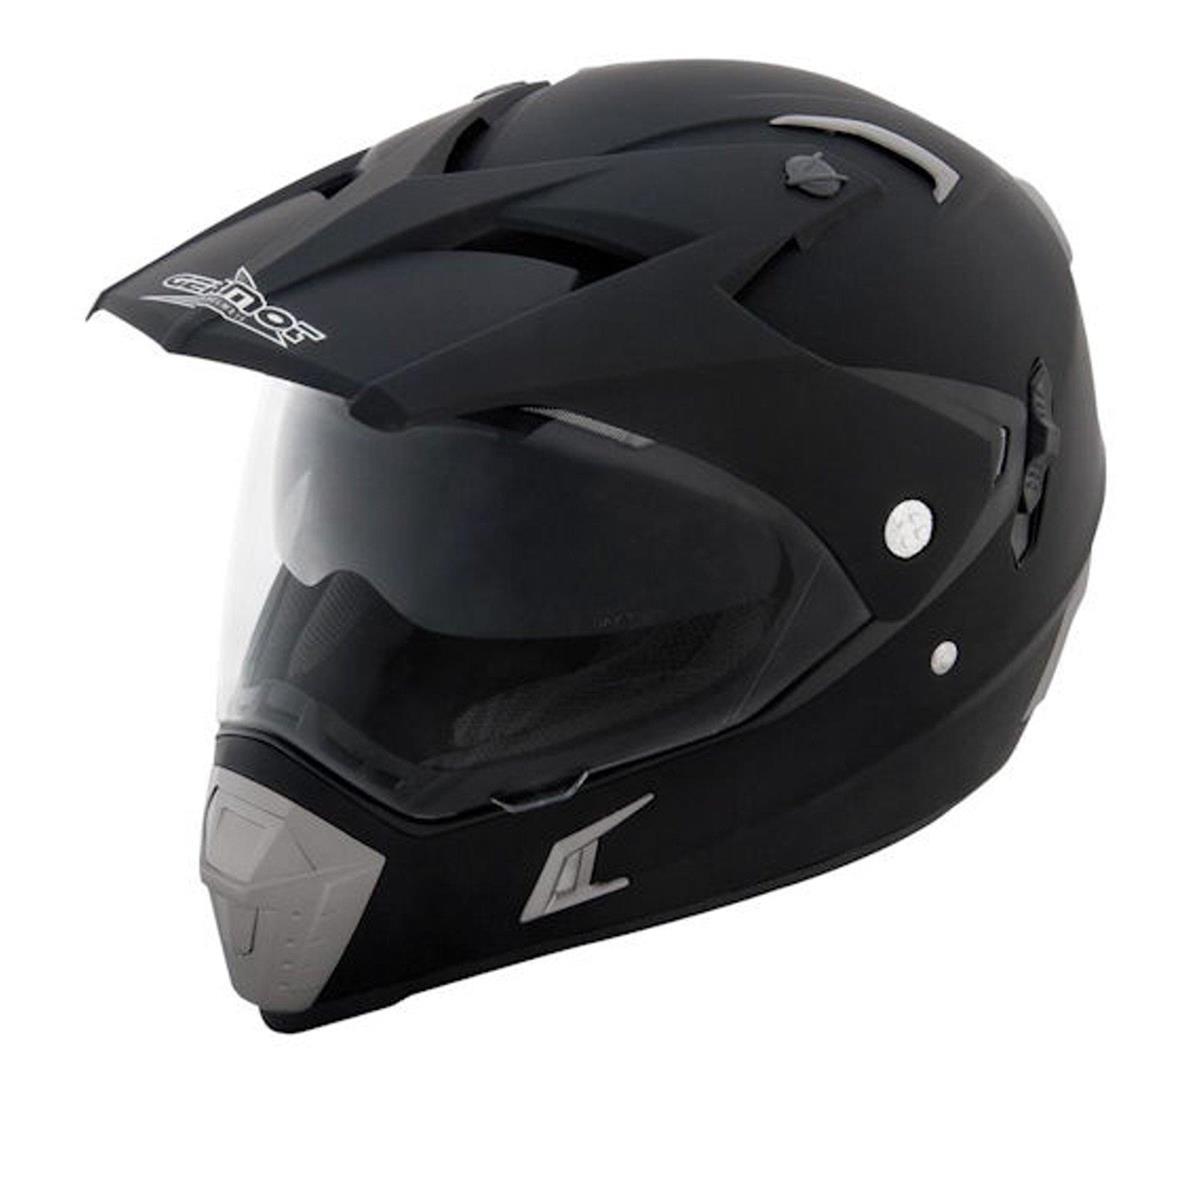 Germot GM 570 Cross Enduro Motorrad Schutz Helm Integrierte Sonnenblende 